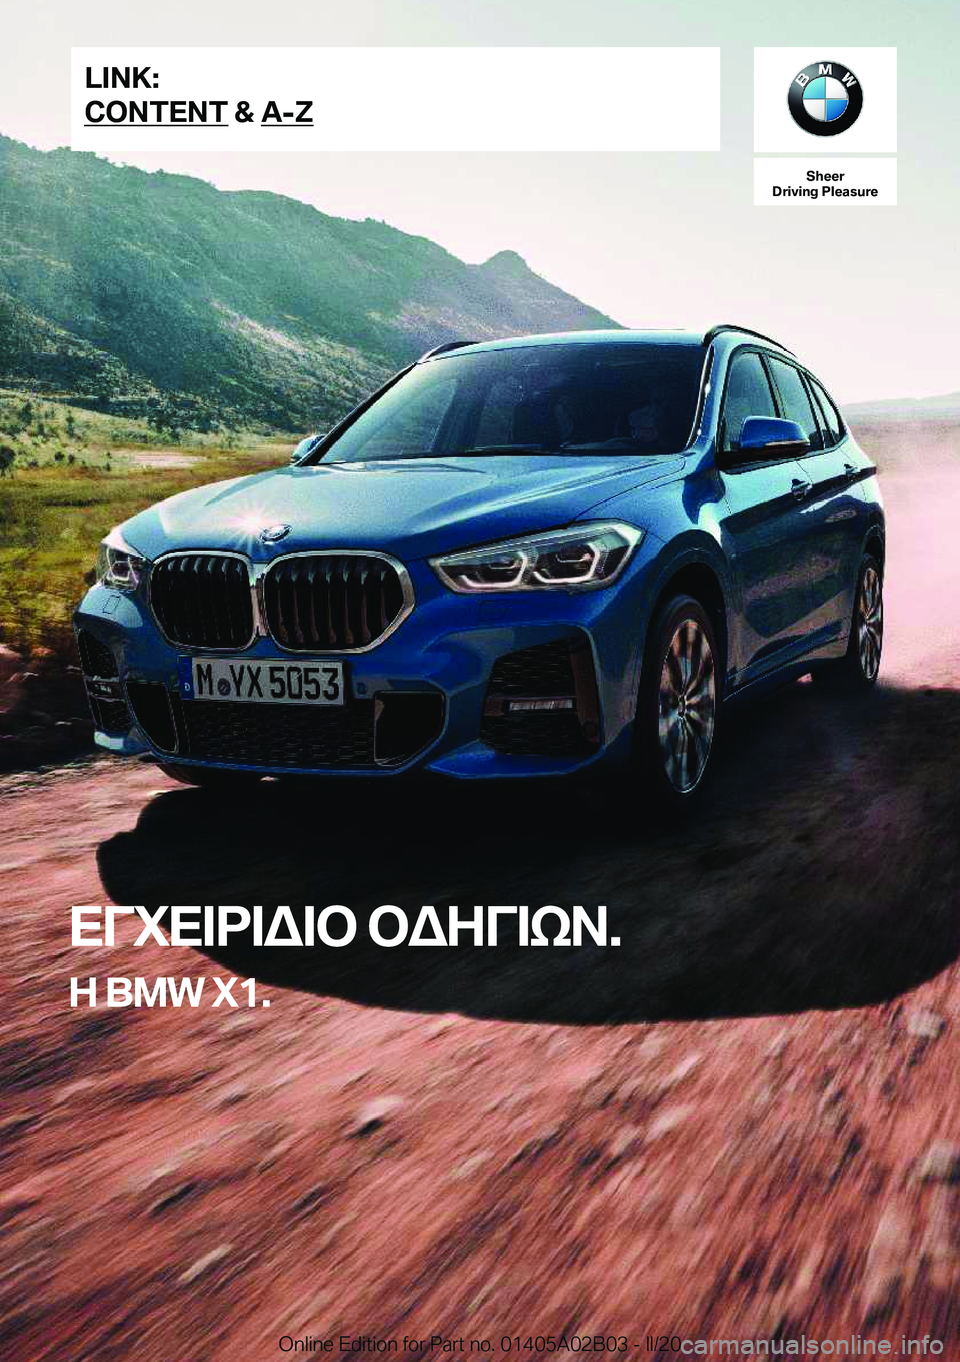 BMW X1 2020  ΟΔΗΓΌΣ ΧΡΉΣΗΣ (in Greek) �S�h�e�e�r
�D�r�i�v�i�n�g��P�l�e�a�s�u�r�e
XViX=d=W=b�bWZV=kA�.
Z��B�M�W��X�1�.�L�I�N�K�:
�C�O�N�T�E�N�T��&��A�-�Z�O�n�l�i�n�e��E�d�i�t�i�o�n��f�o�r��P�a�r�t��n�o�.��0�1�4